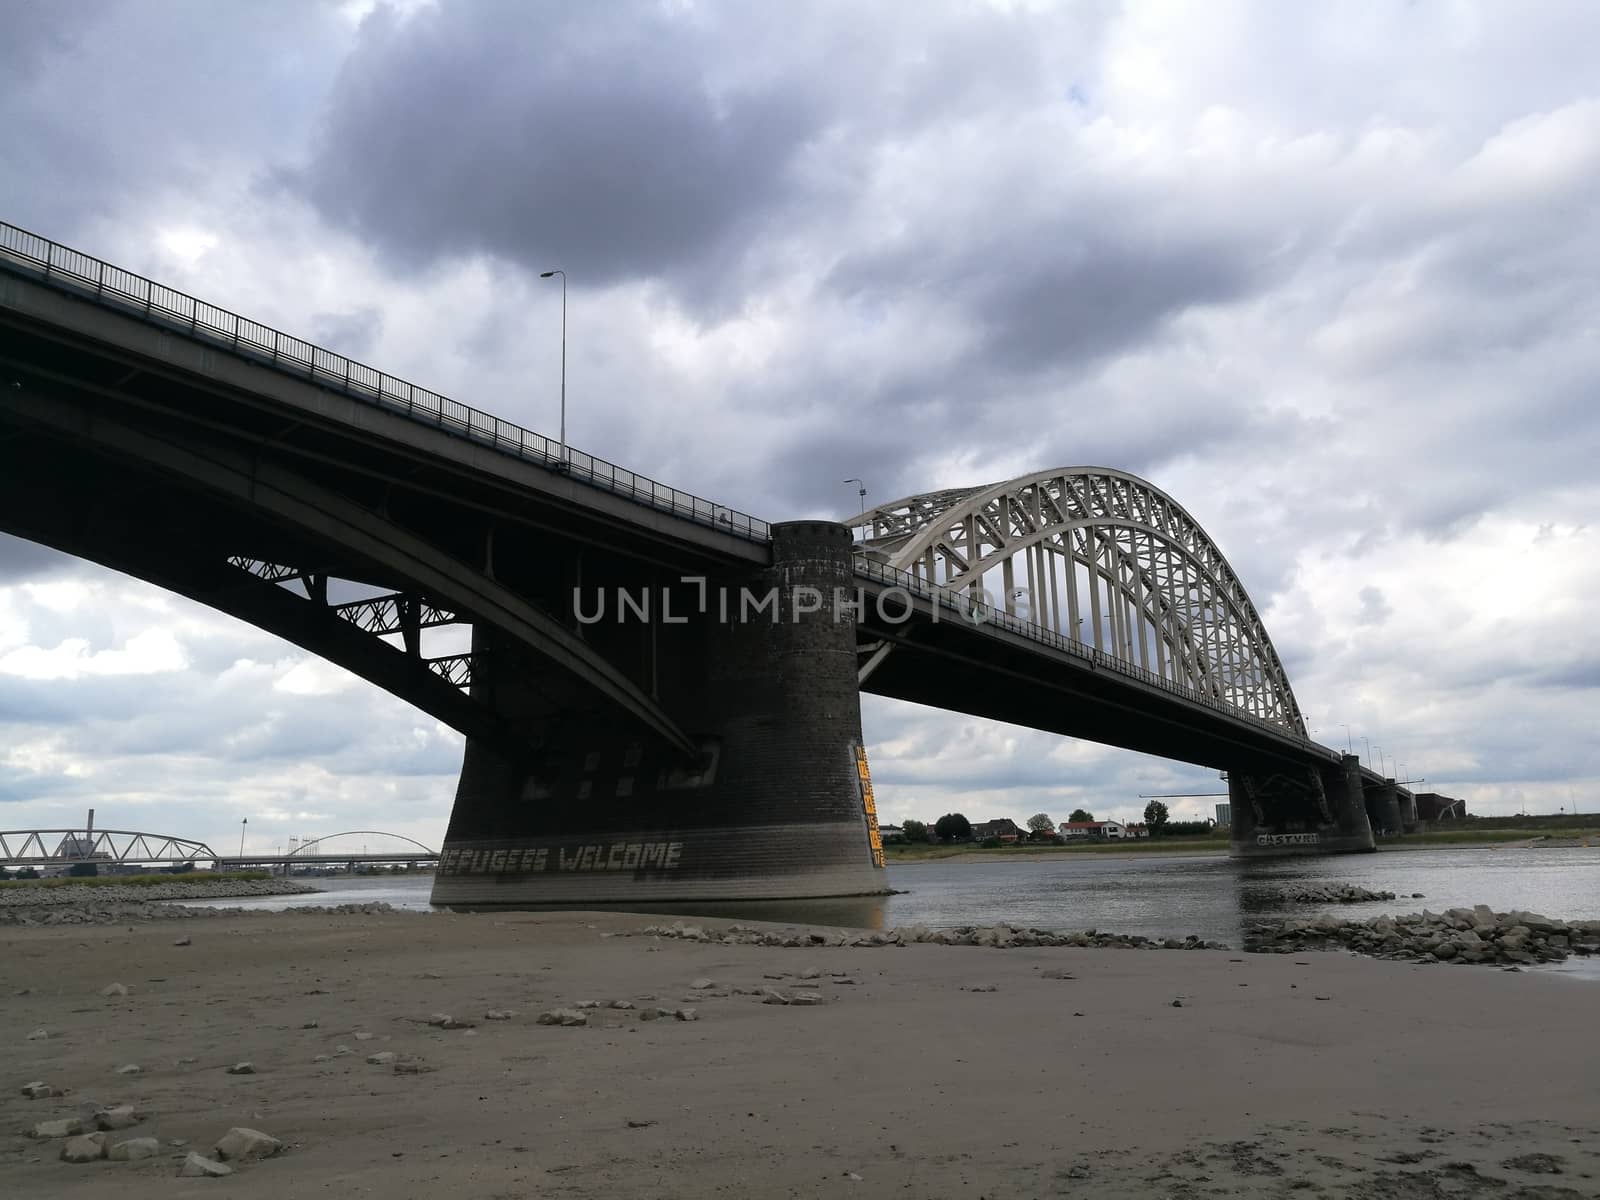 Main bridge over the channel in Nijmegen, Netherlans under a dramatic sky